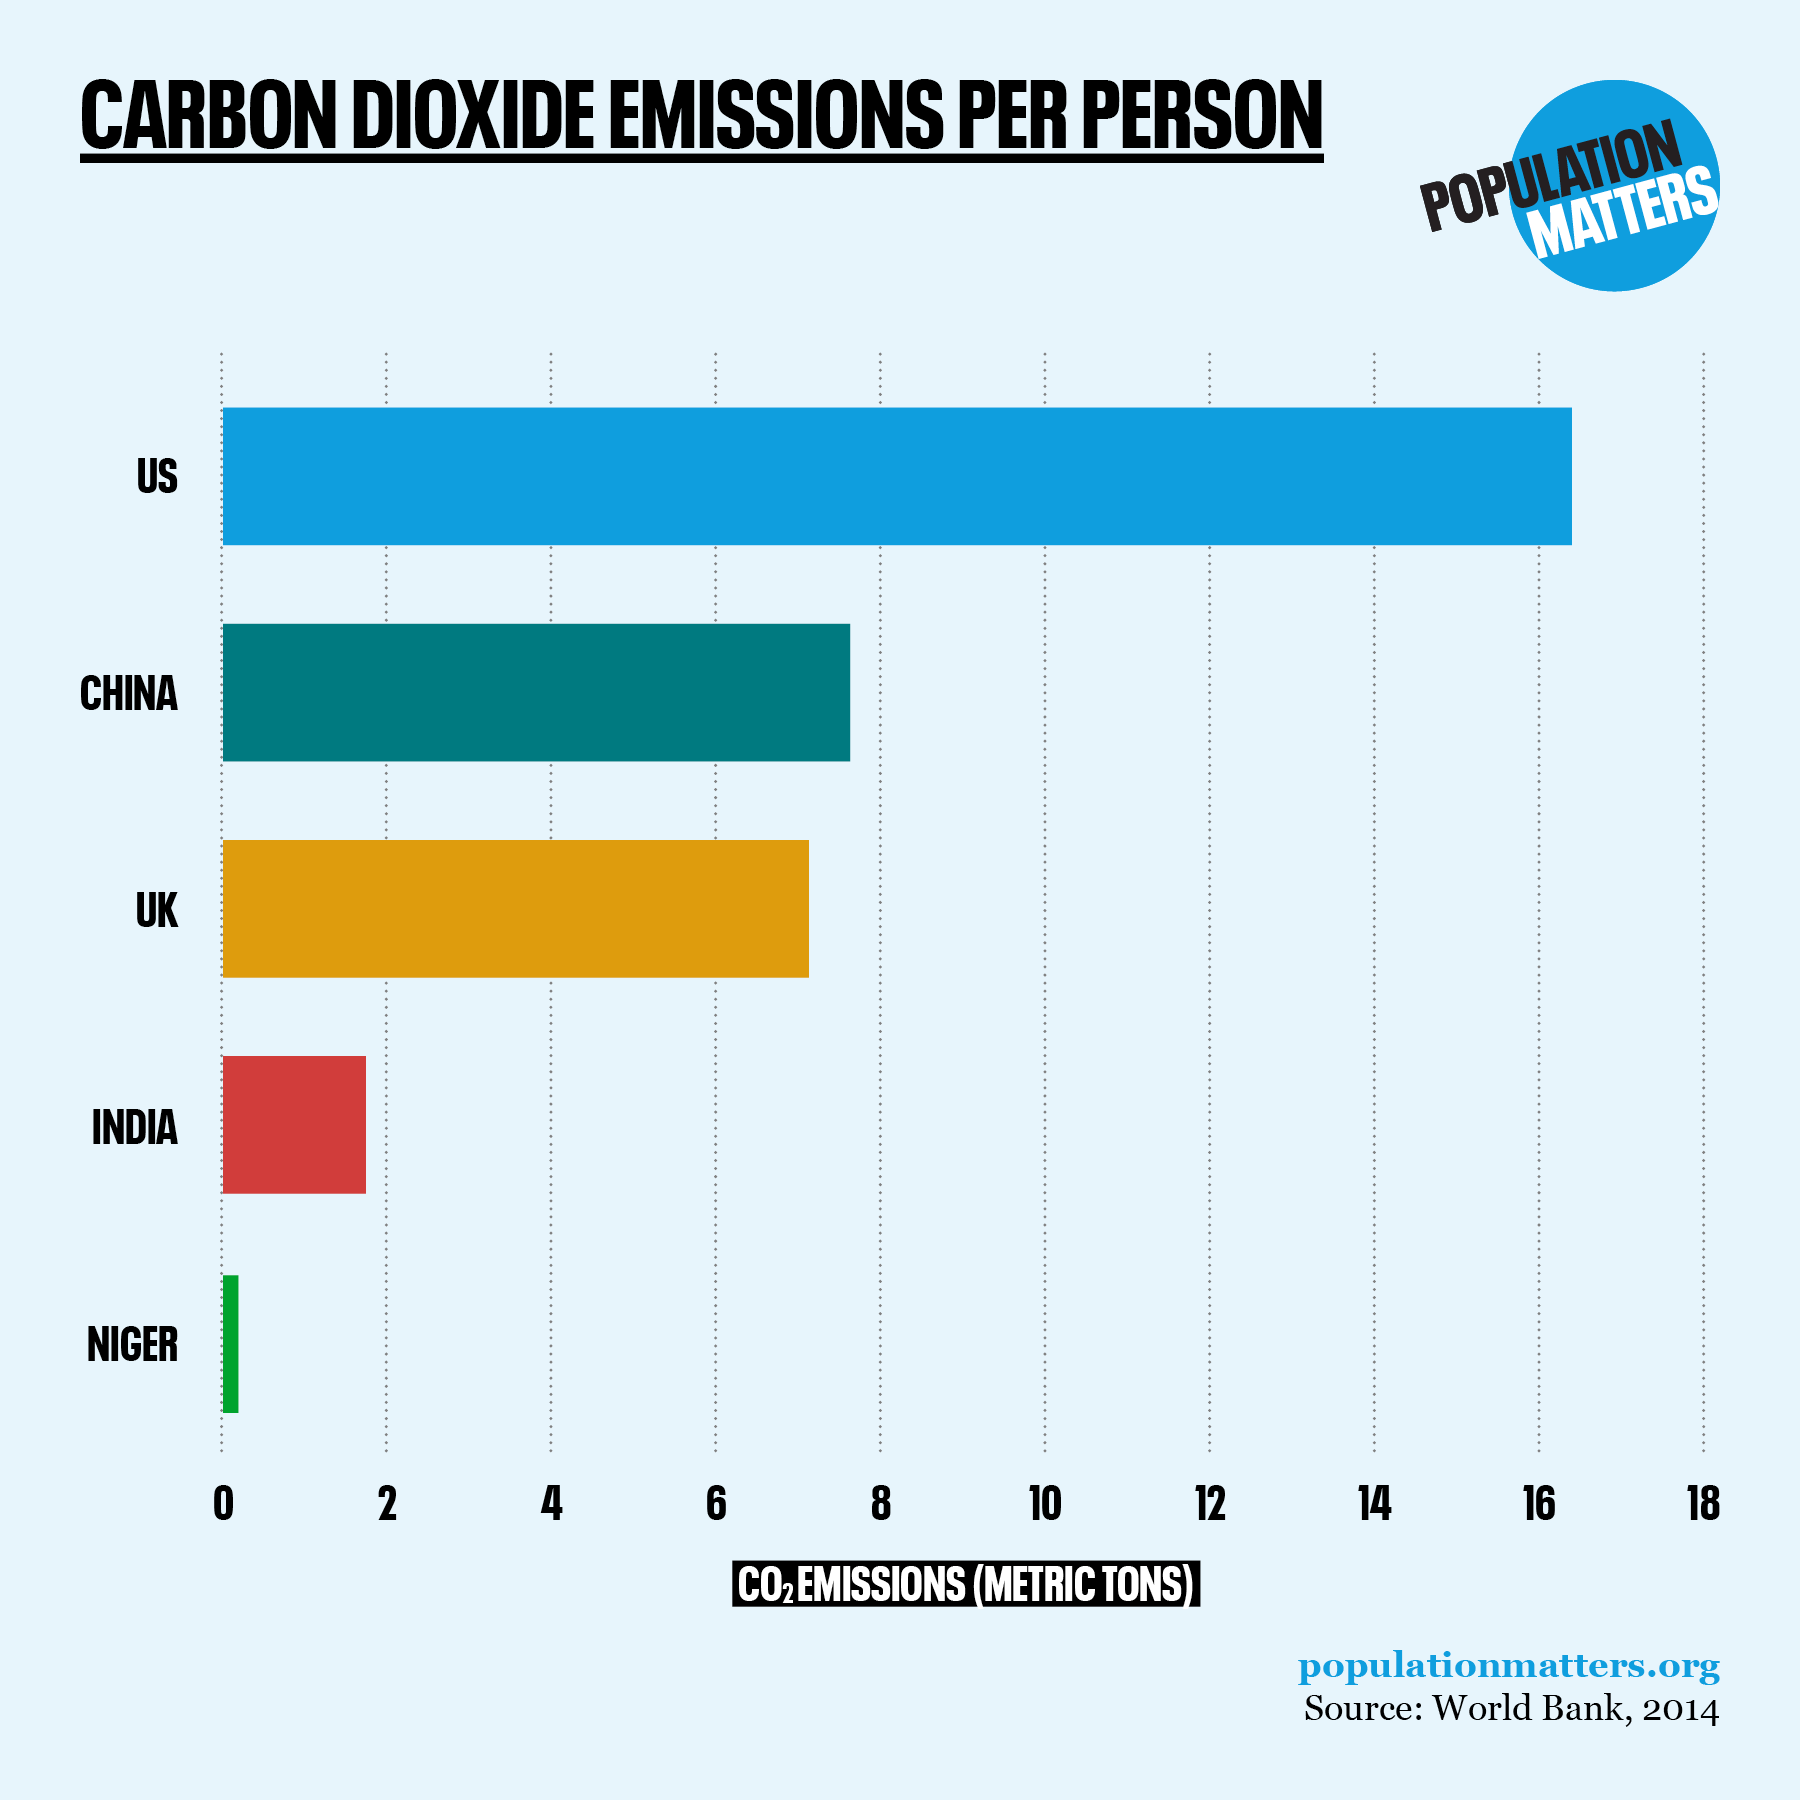 Per capita emissions